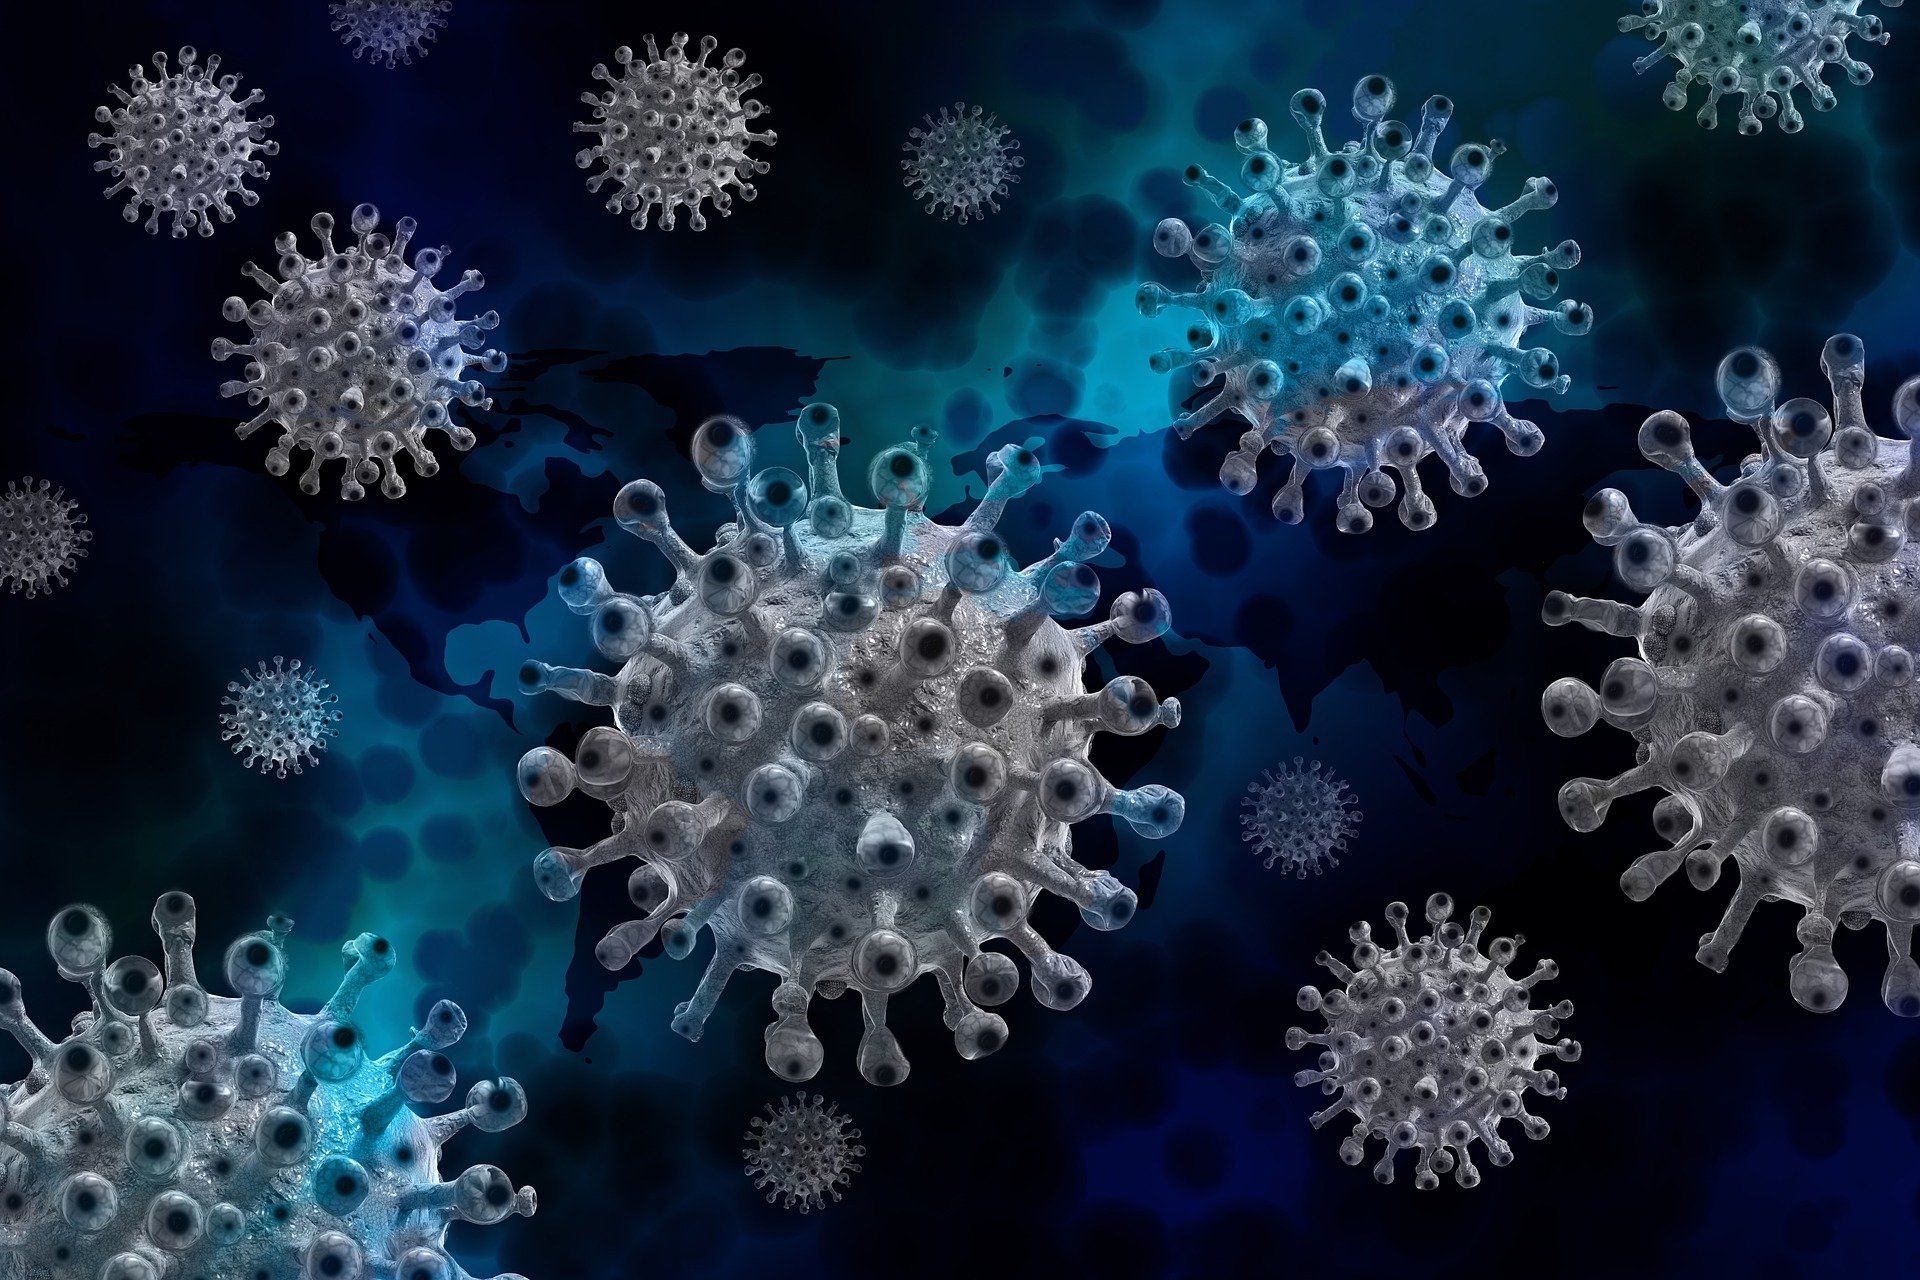 HIV+ woman carries coronavirus for 216 days, mutated 32 times: Study